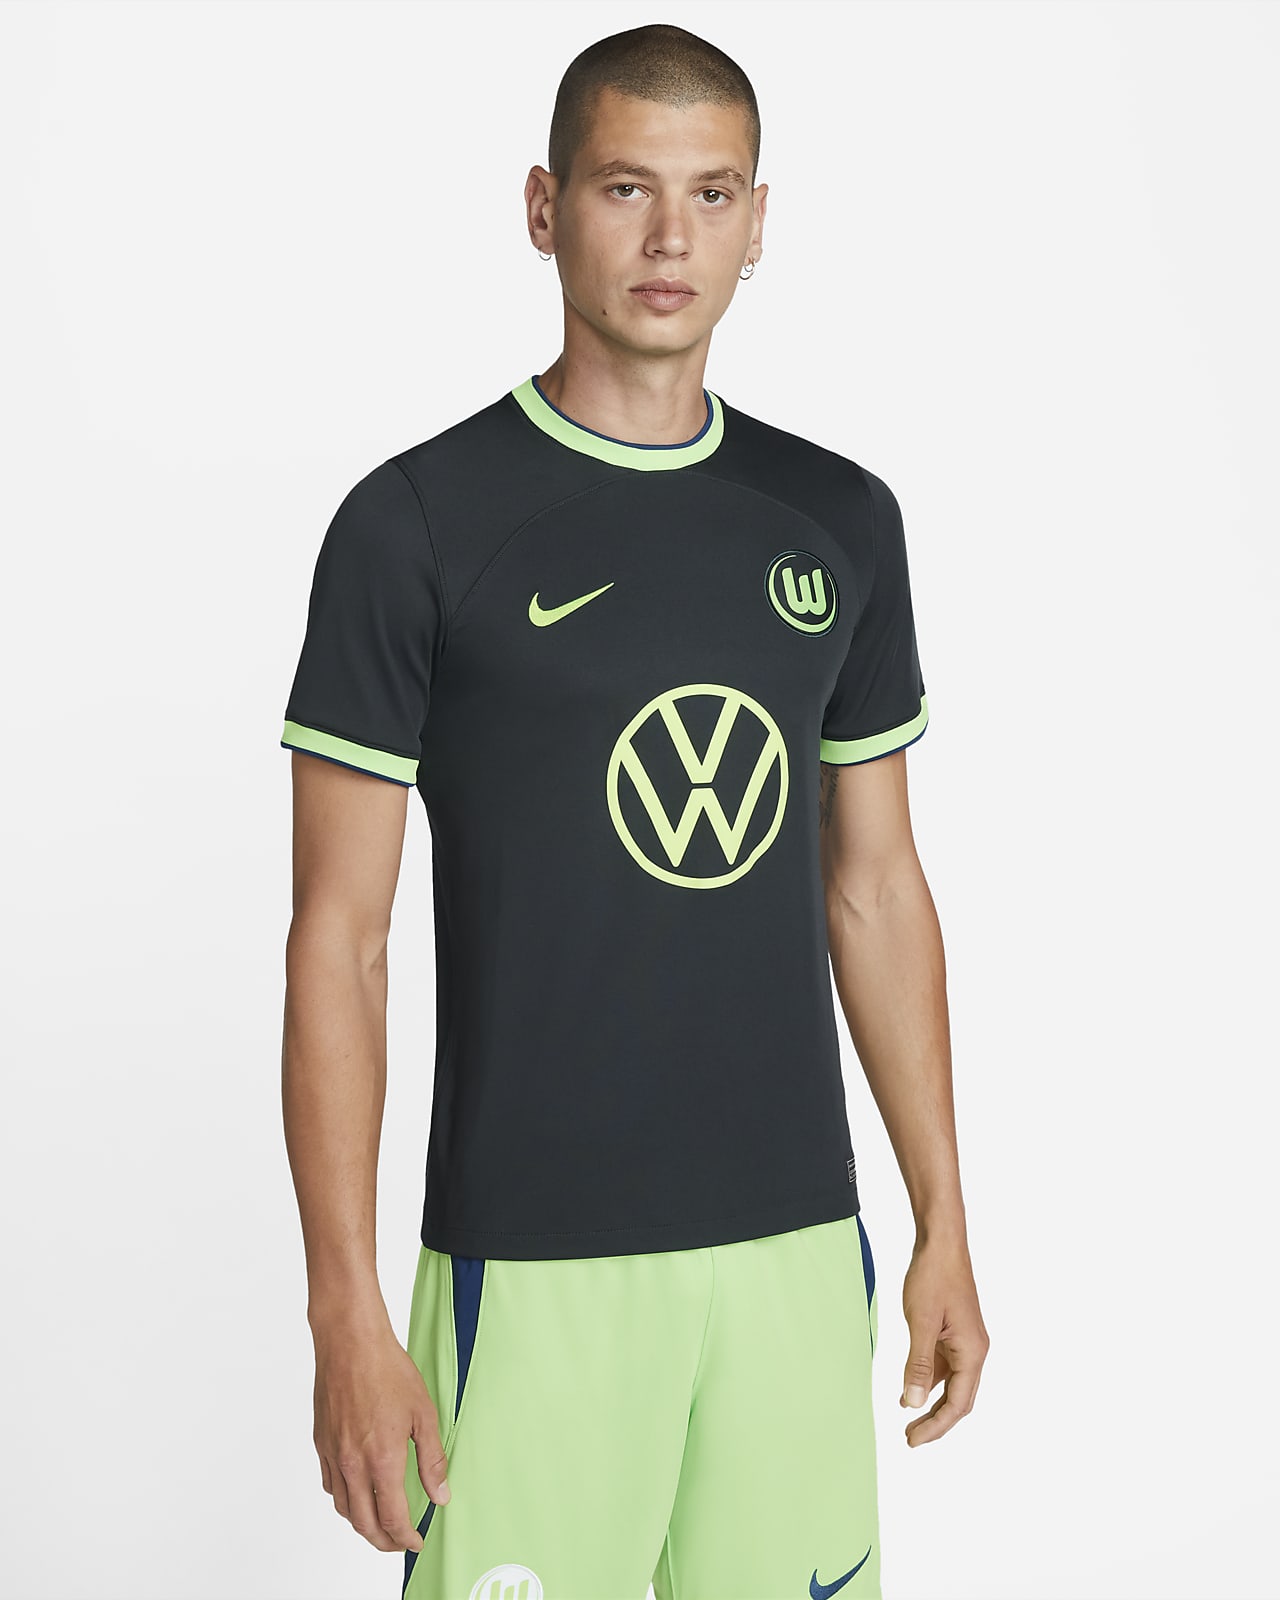 afschaffen kijk in zoon VfL Wolfsburg 2022/23 Stadium Away Men's Nike Dri-FIT Soccer Jersey. Nike .com